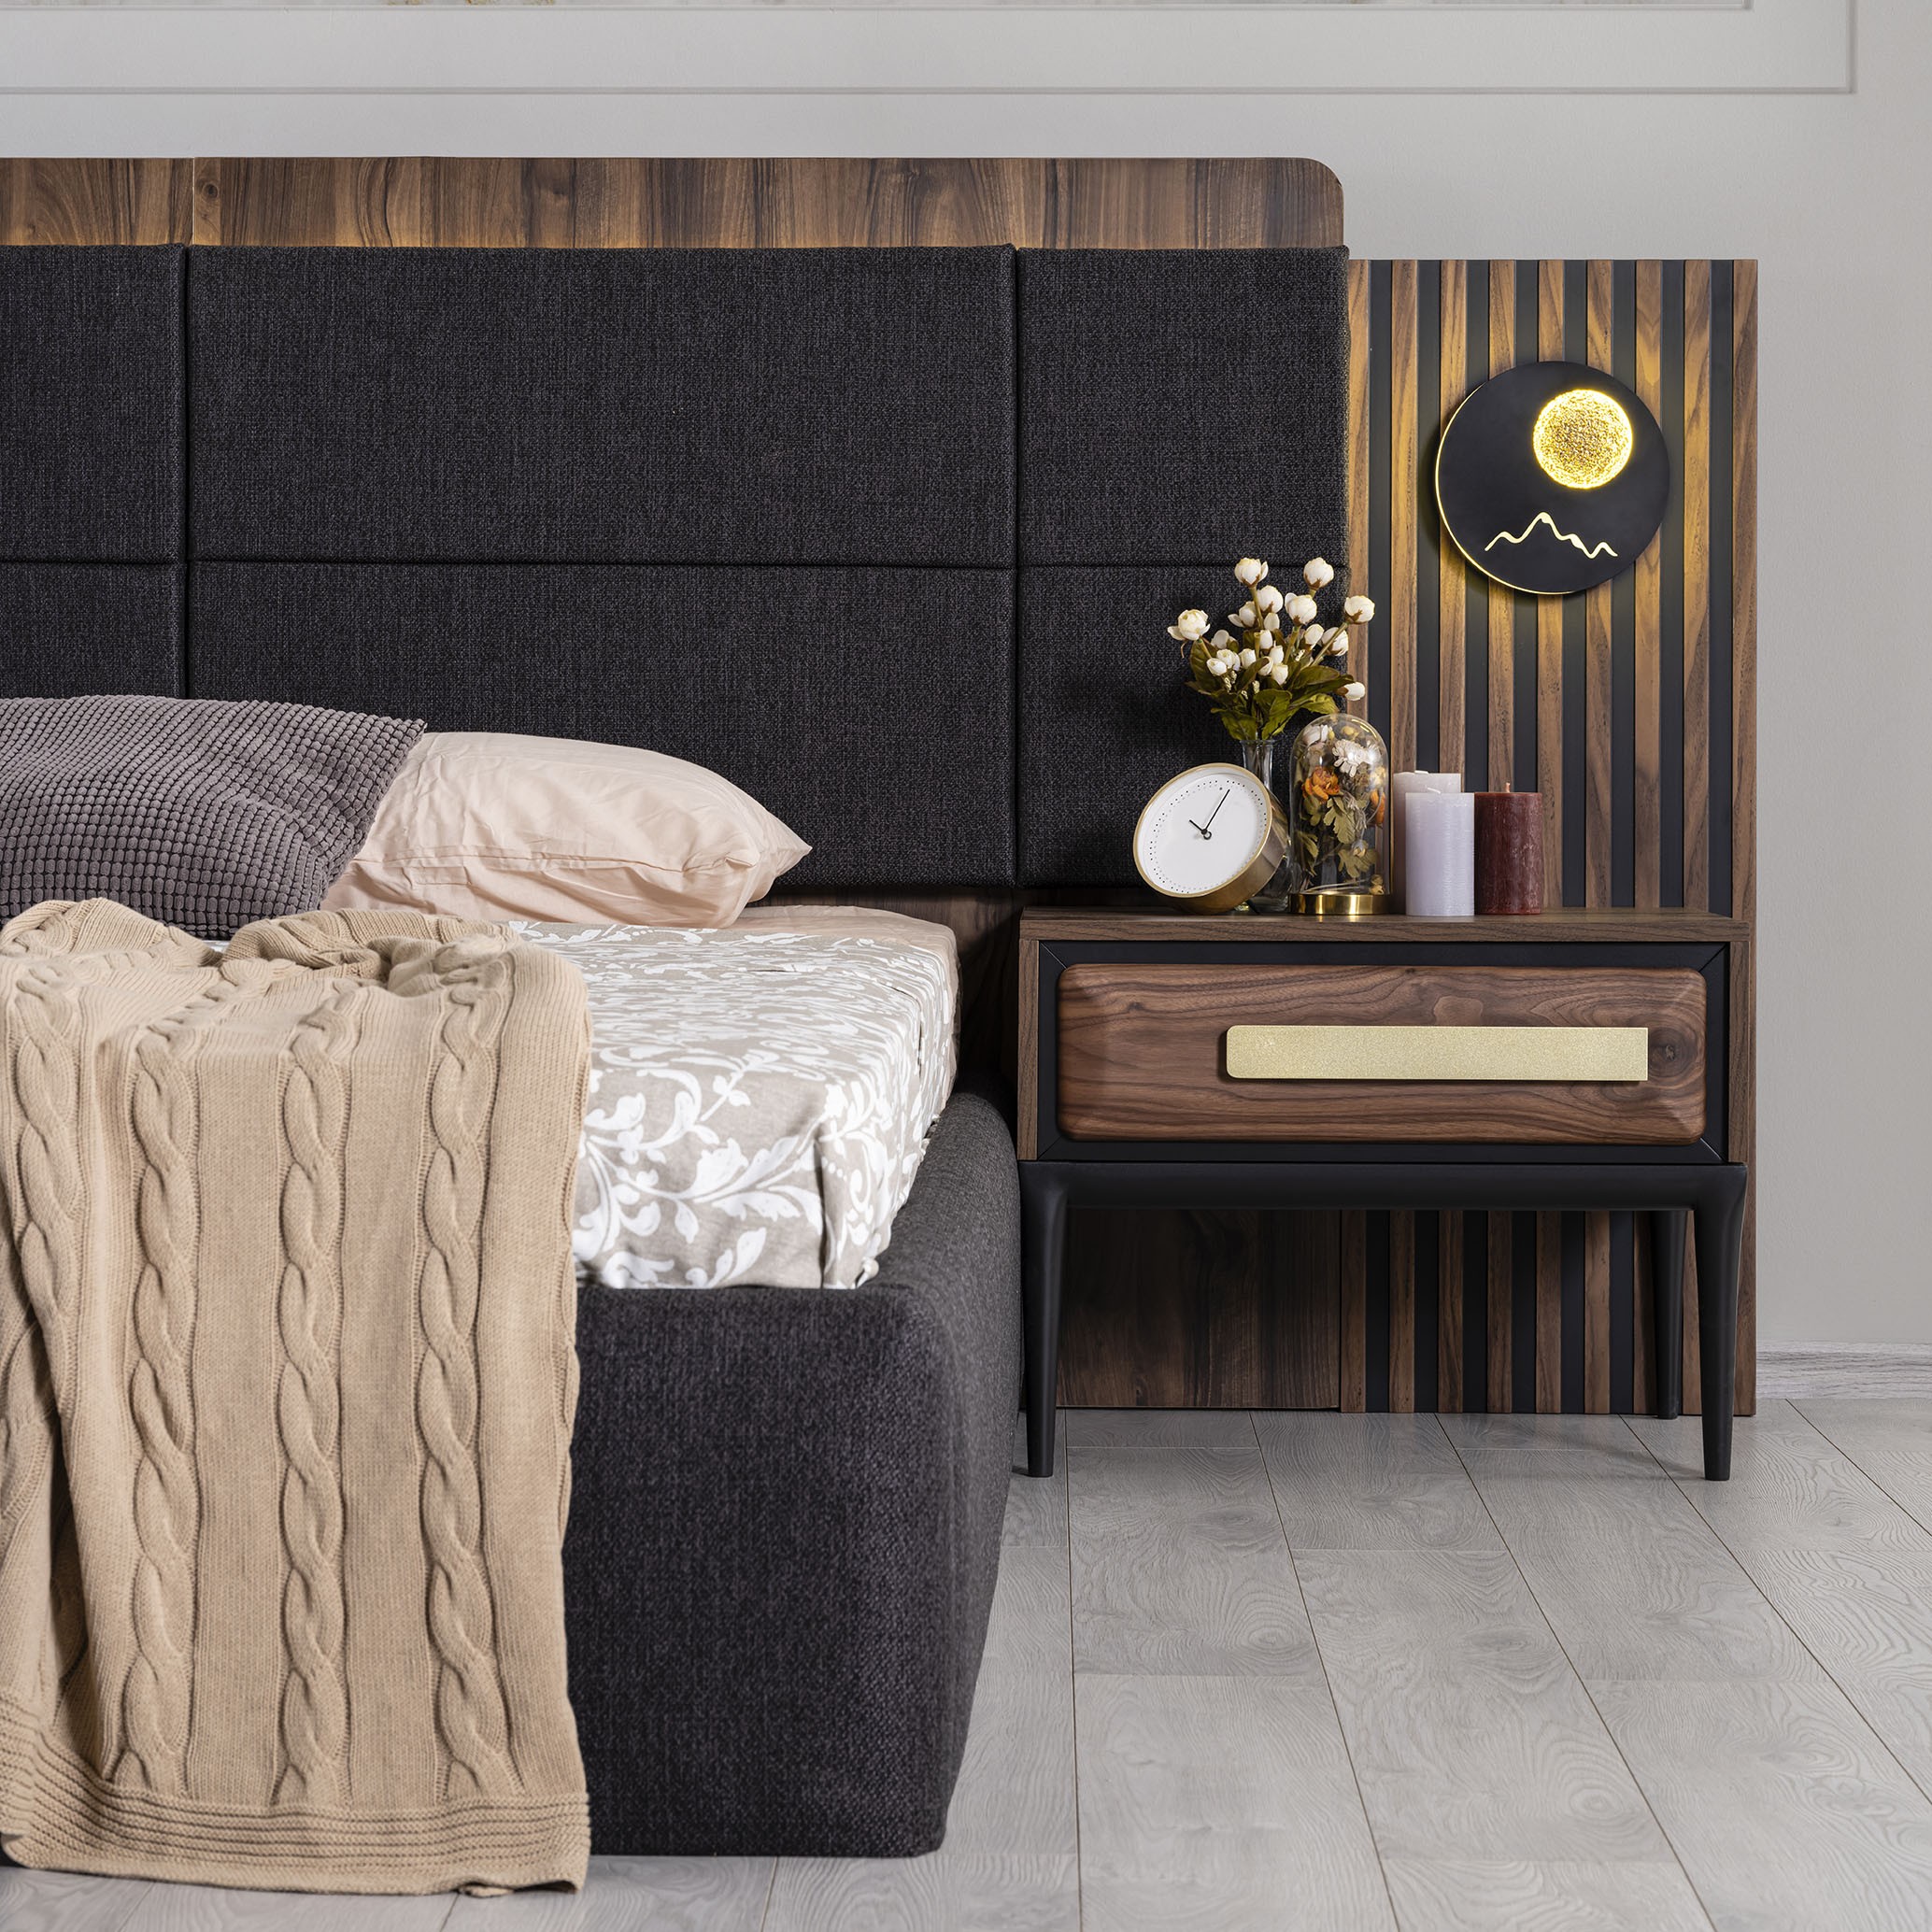 Armani Bed Without Storage 160x200 cm